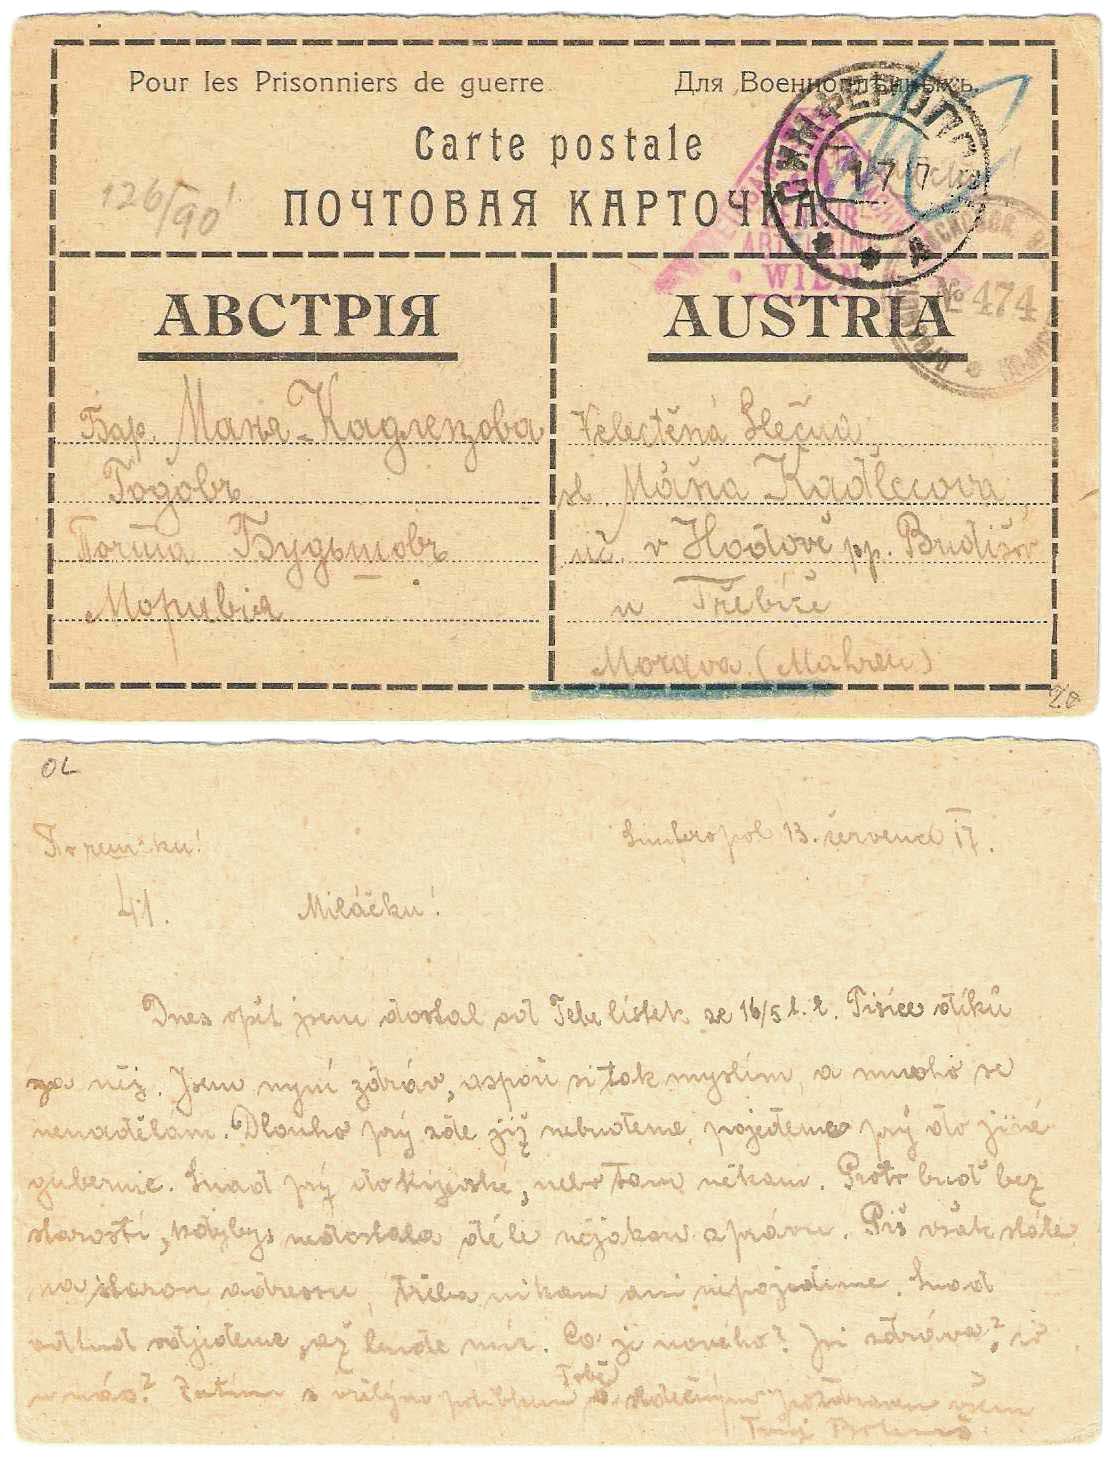 Prisoner of War Postcard from Simferopol to Trebice, Moravia